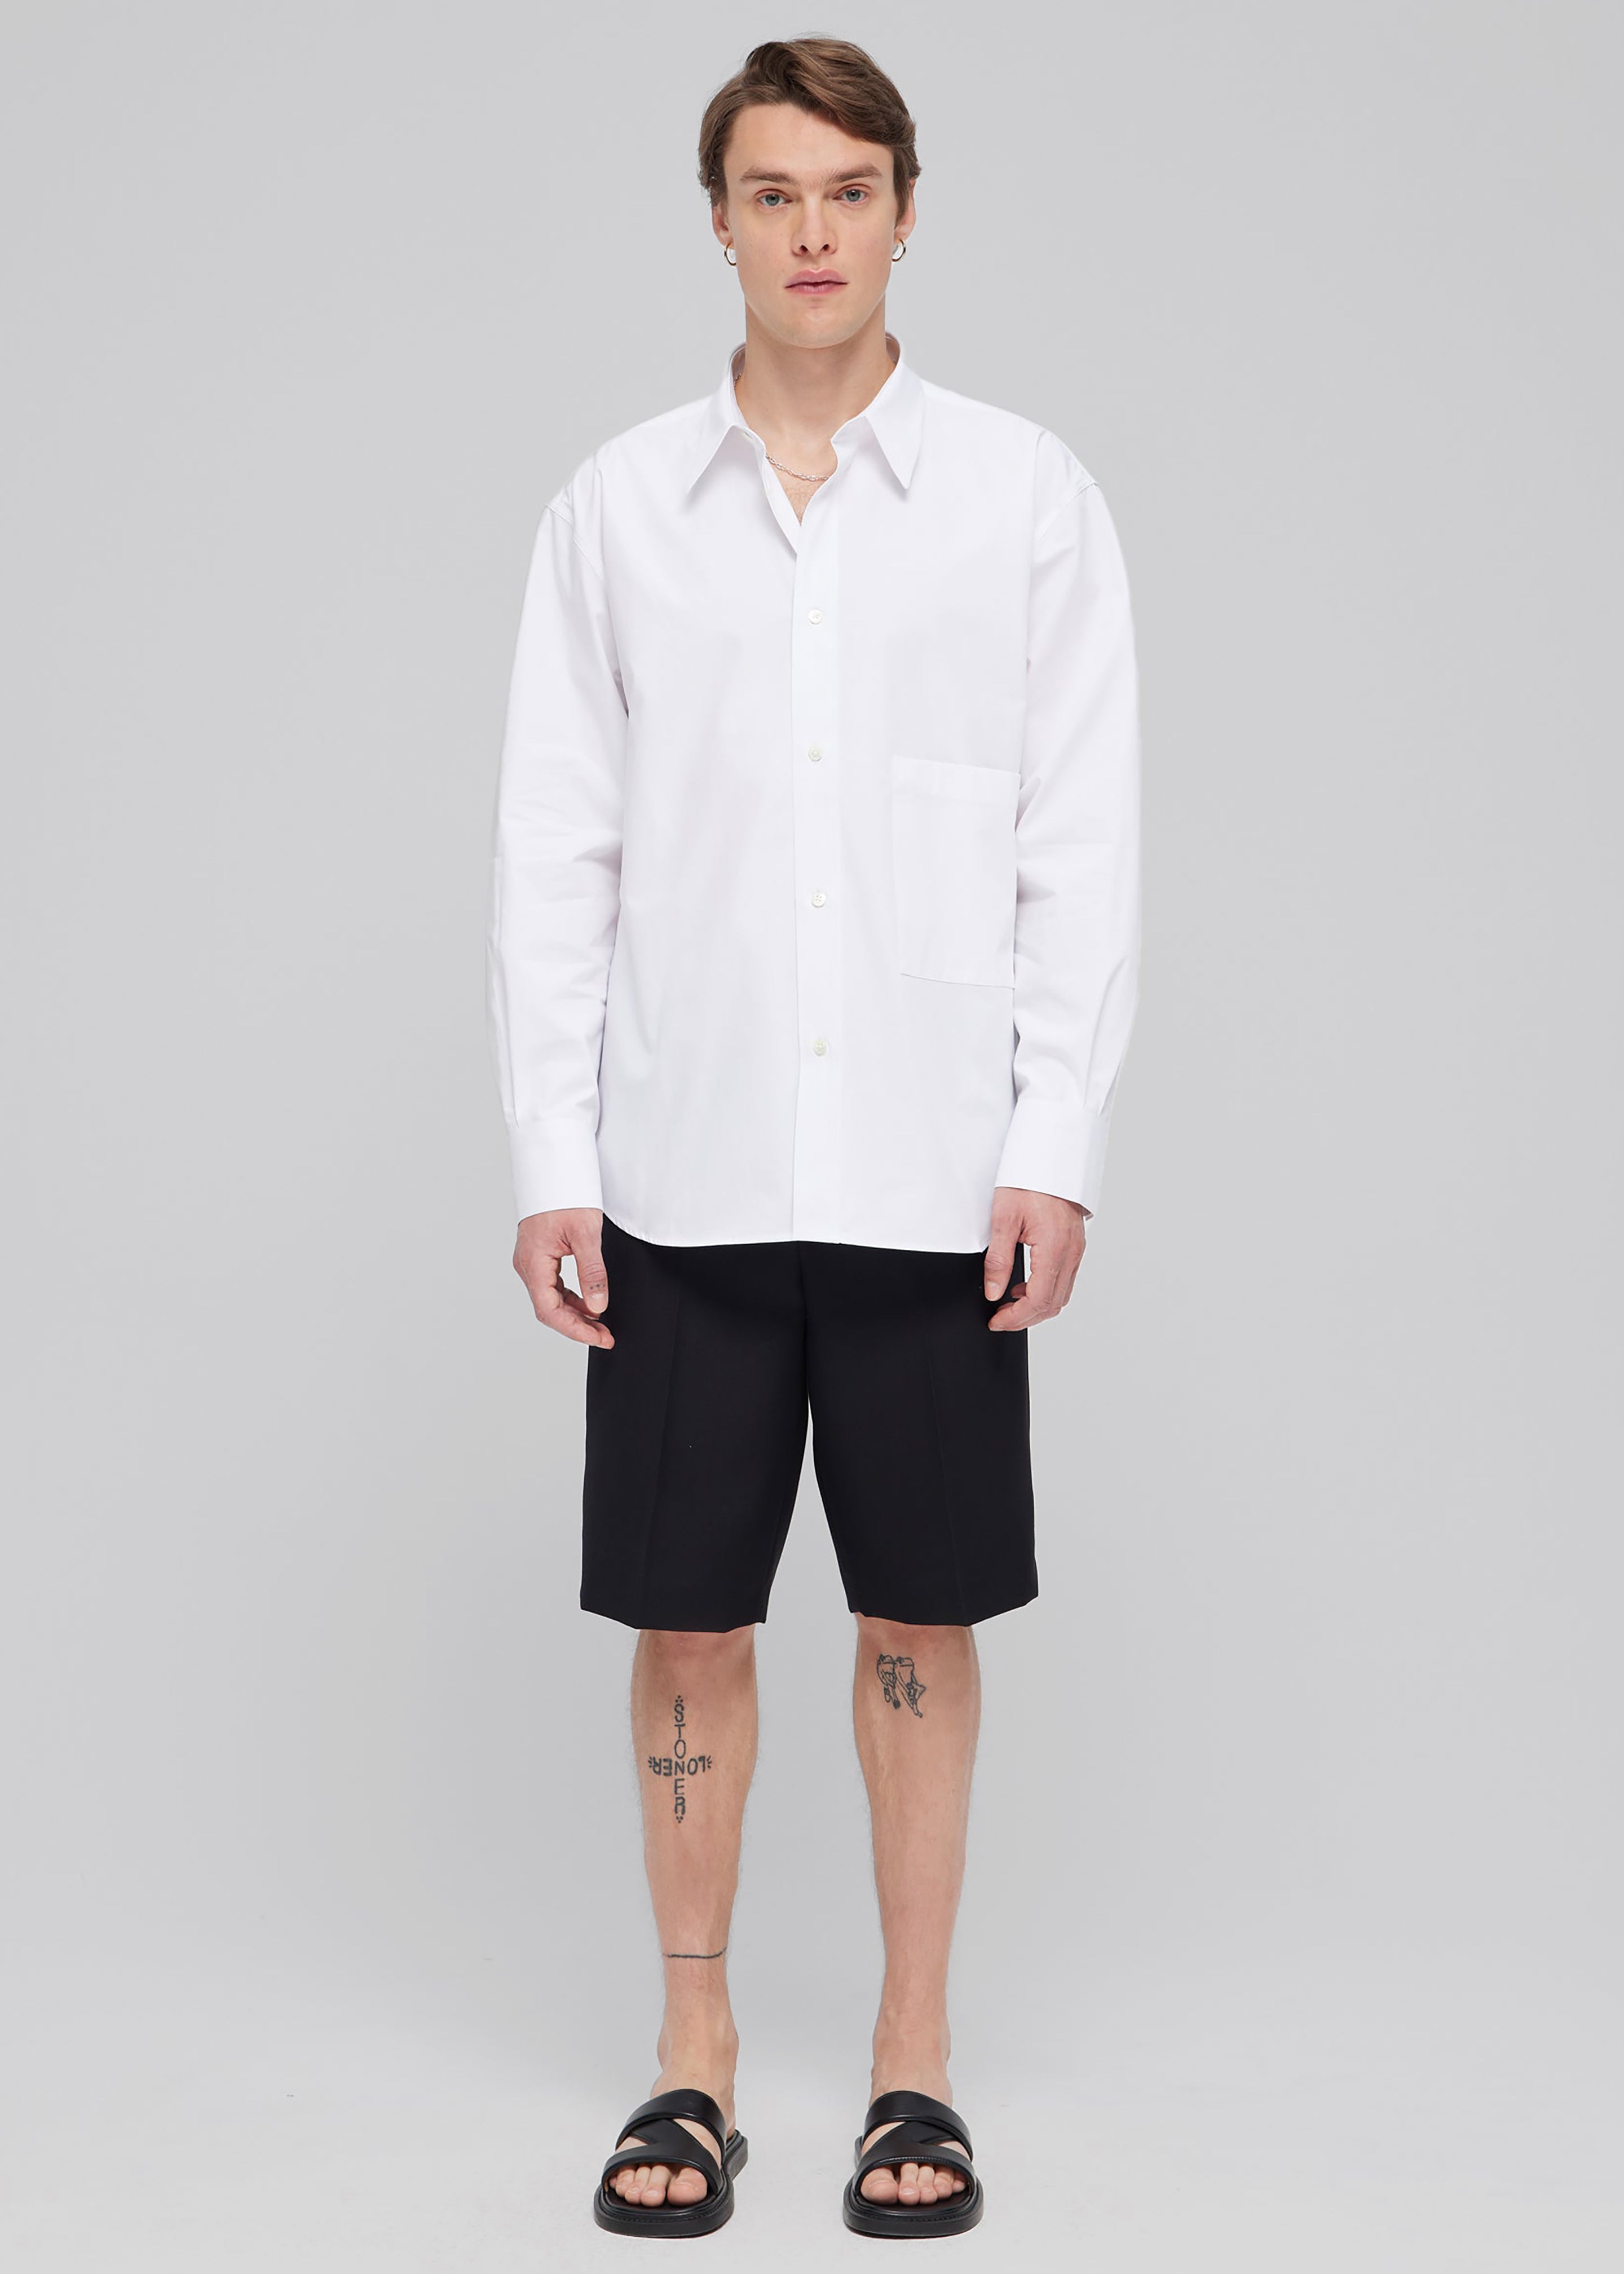 Róhe Unisex Classic Shirt - White - 6 - Róhe Unisex Classic Shirt - White [gender-male]